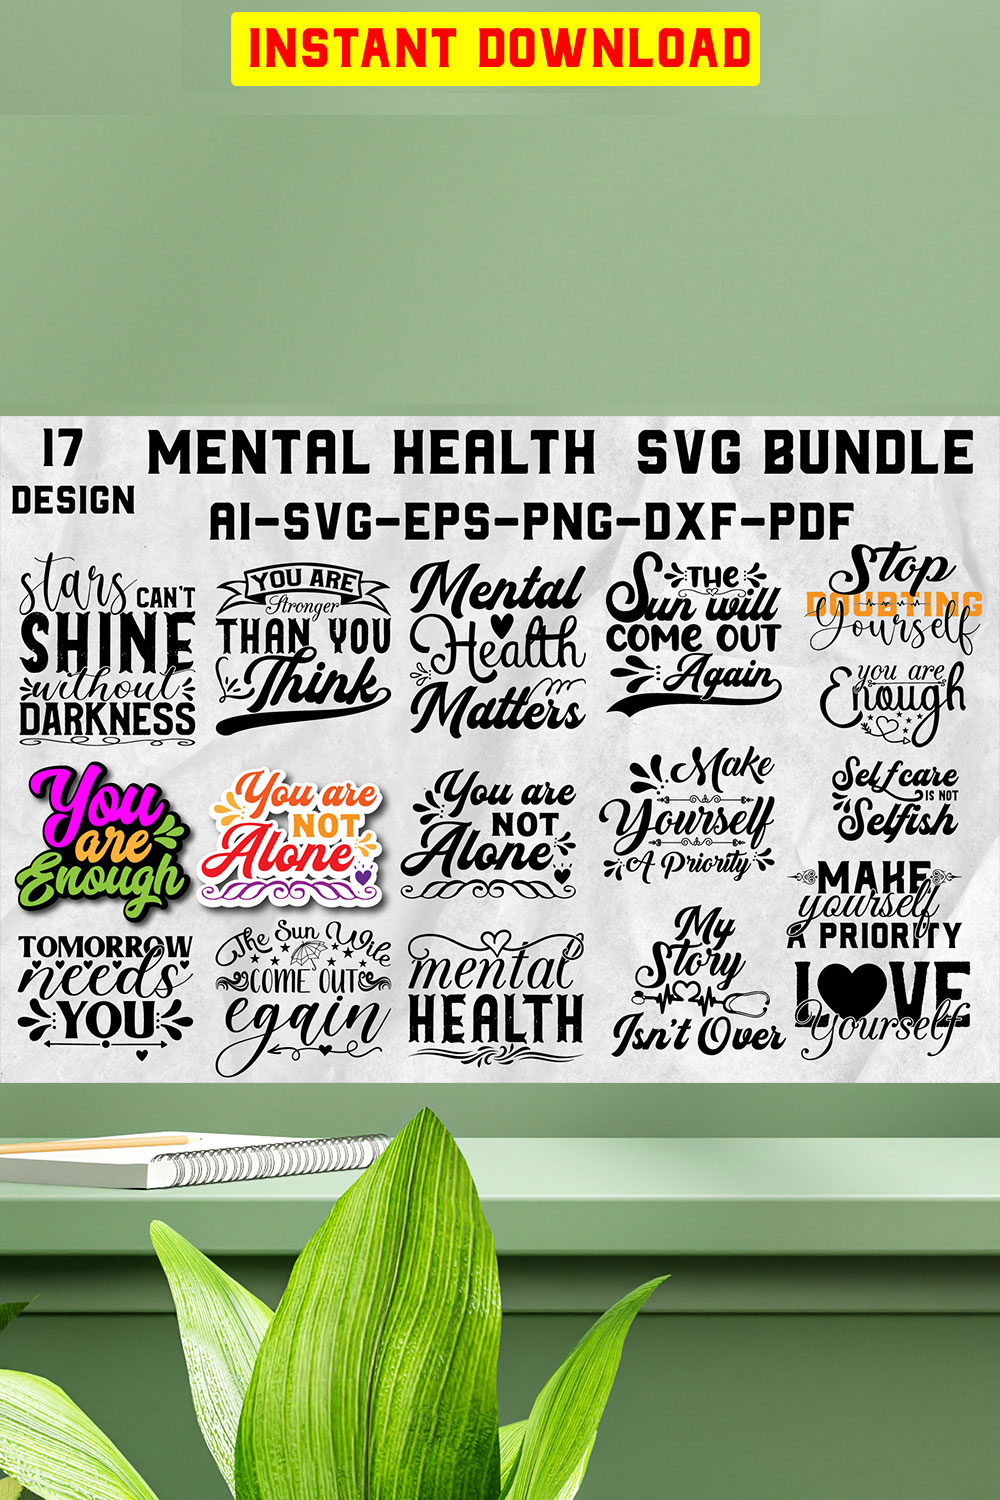 Mental Health Matters SVG Bundle pinterest preview image.